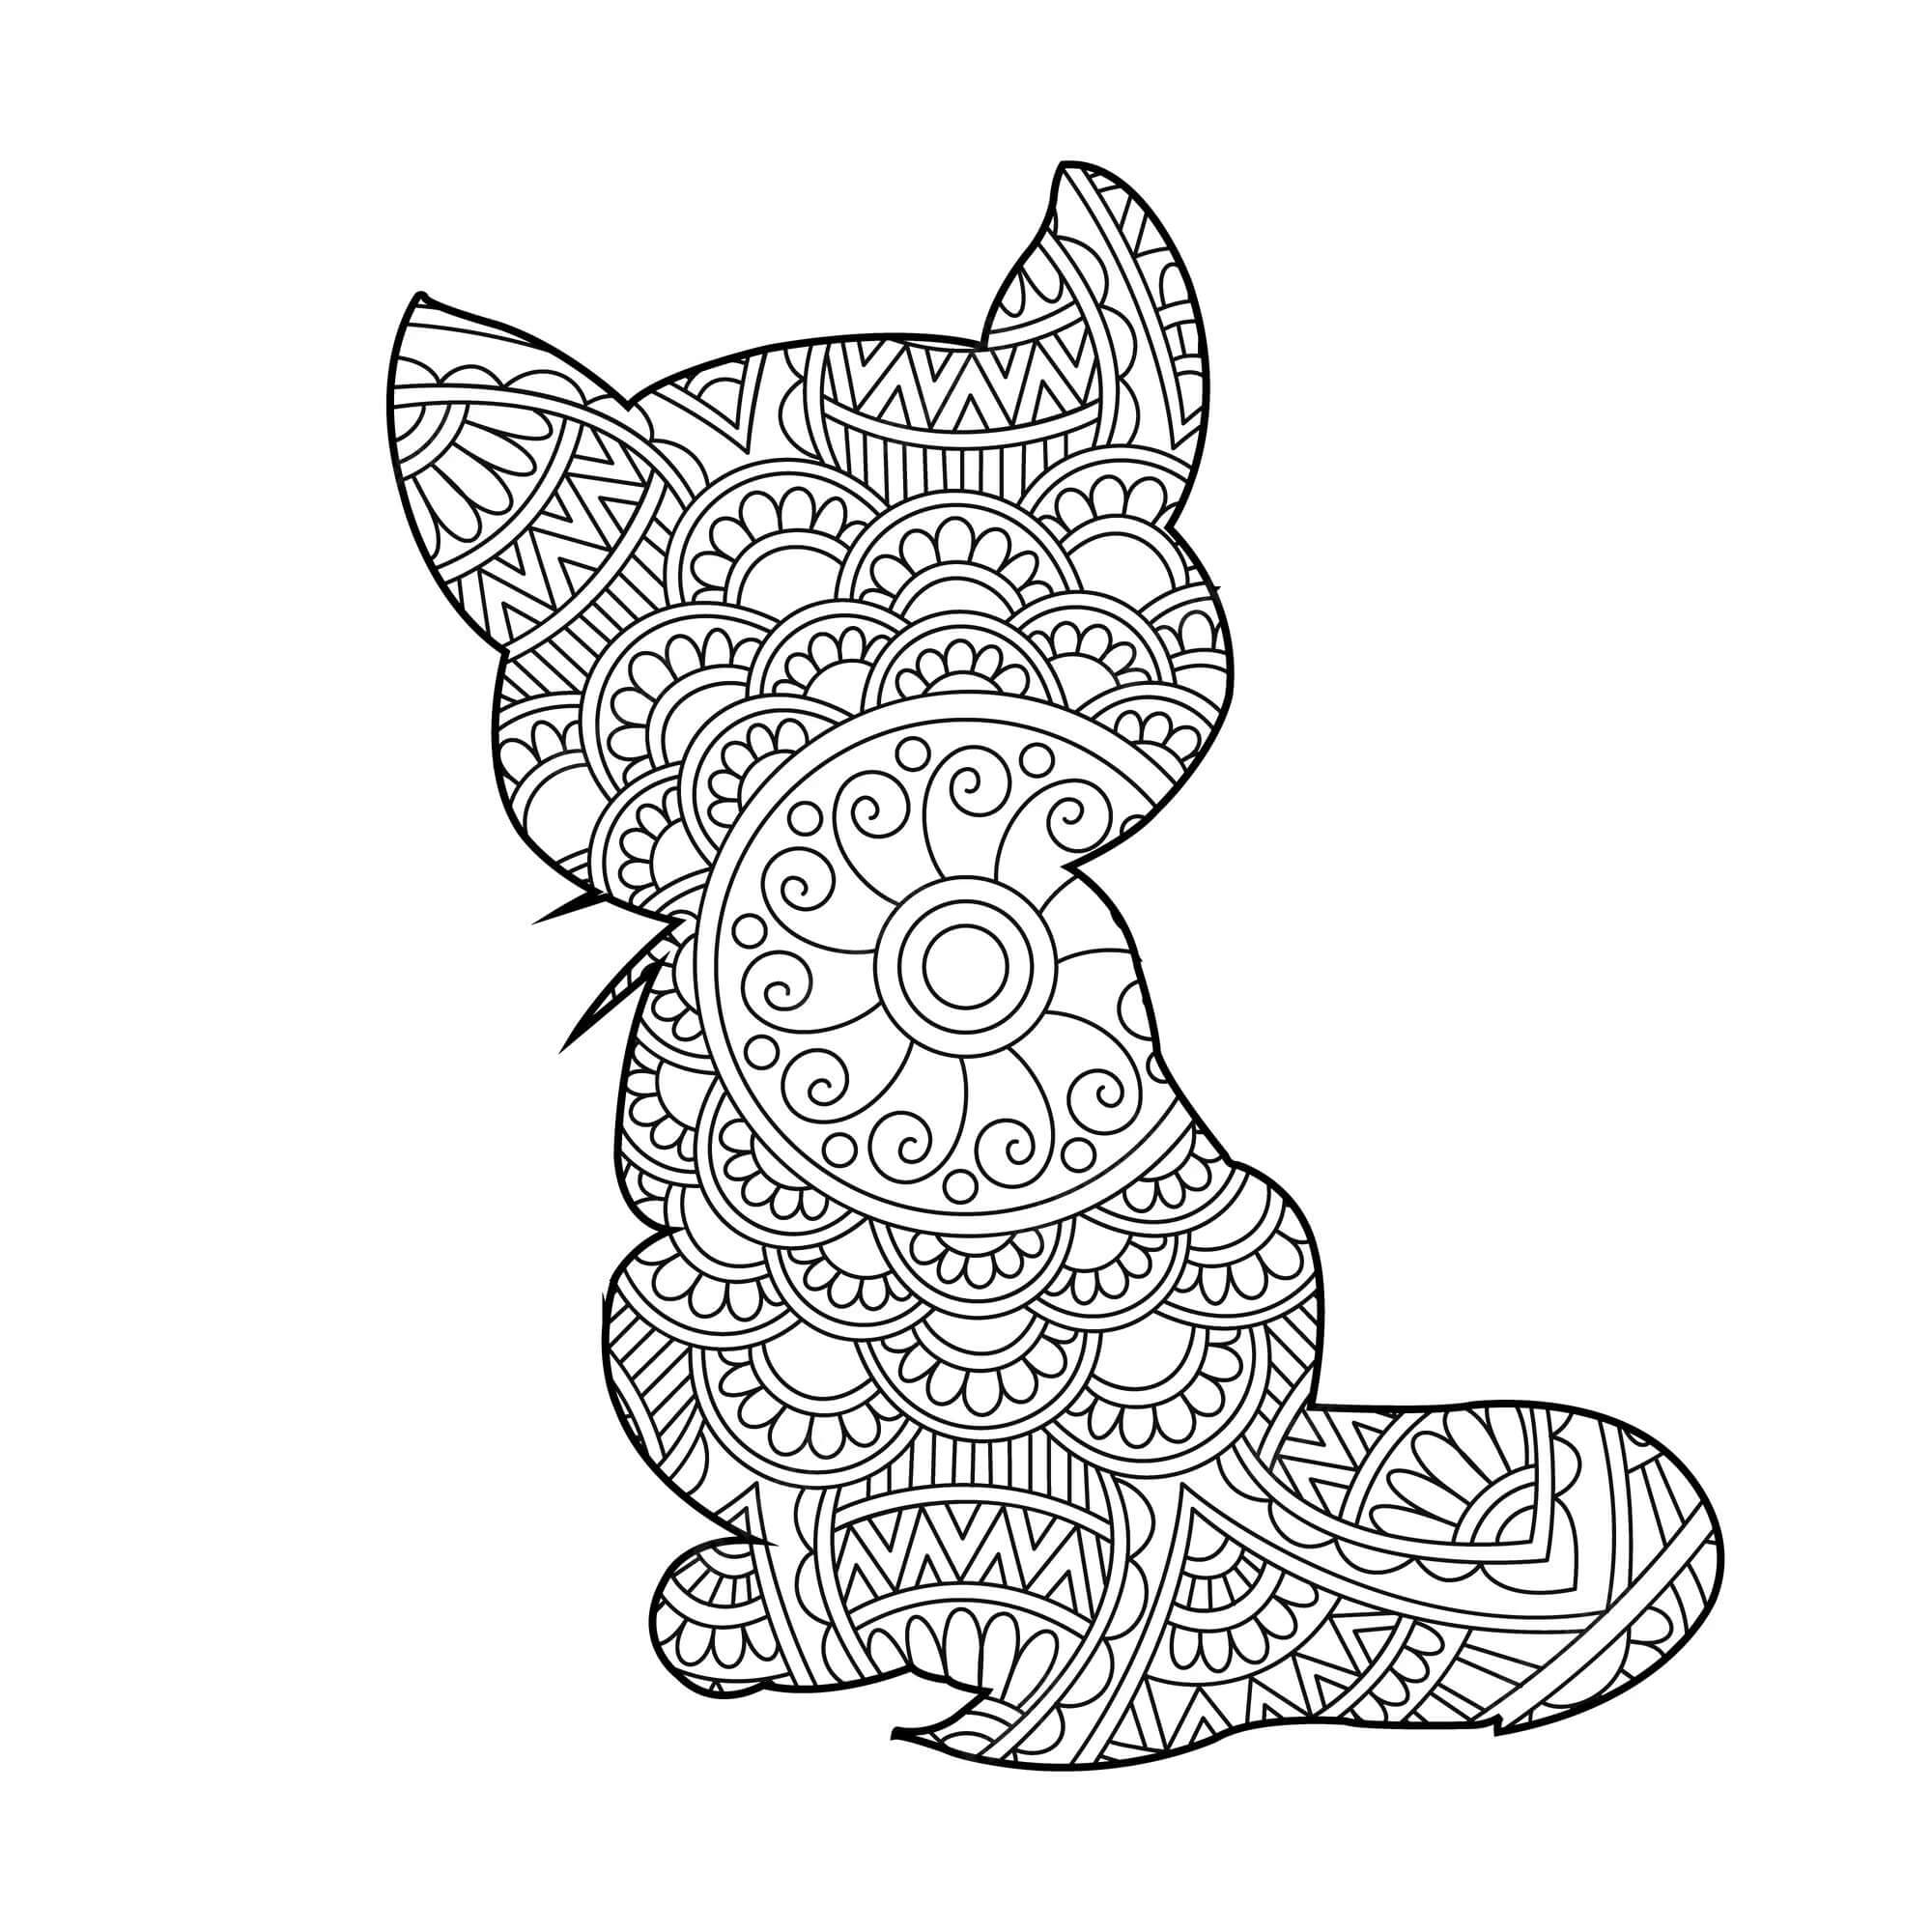 Idea gratuita de Mandala de Gato para colorir